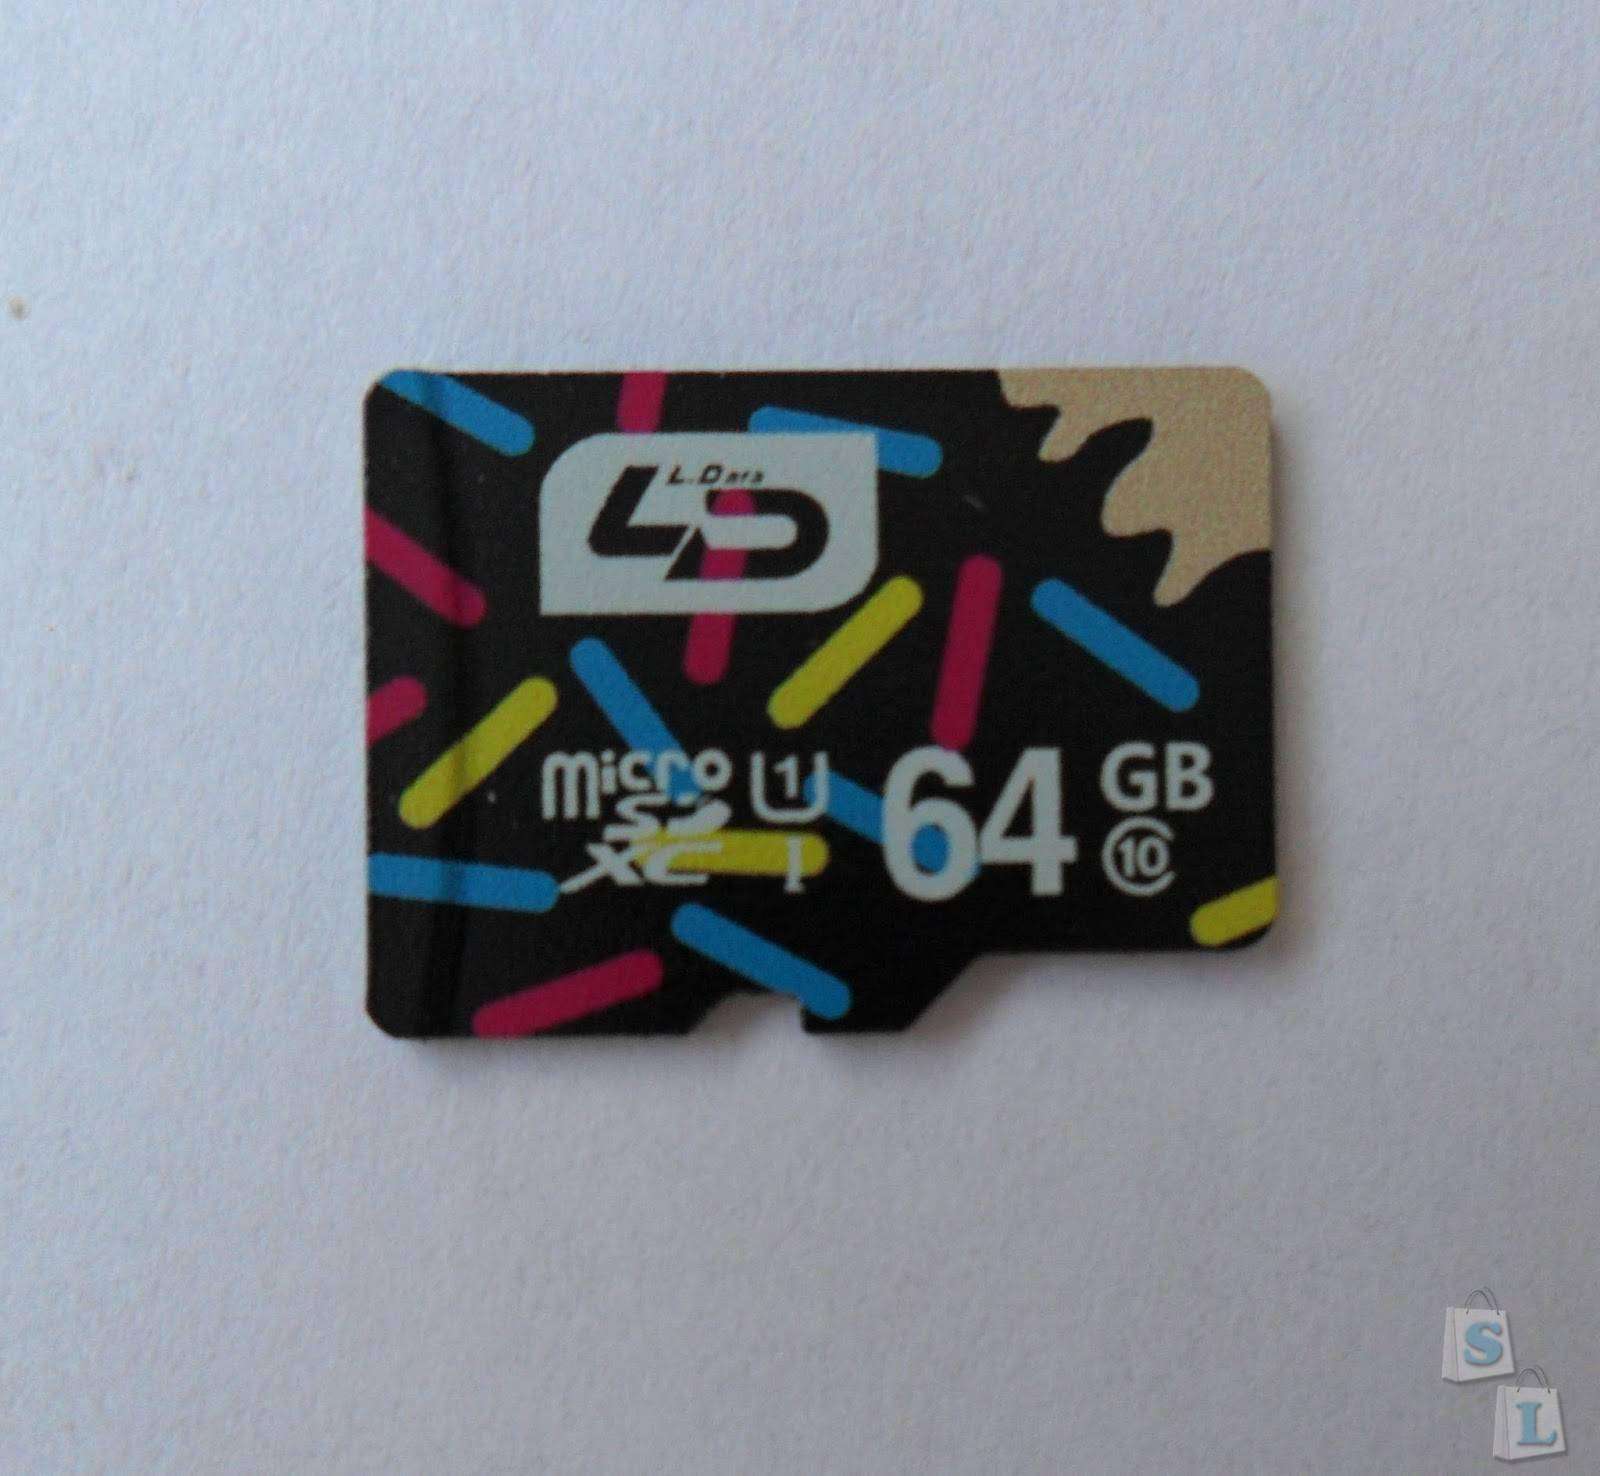 Aliexpress: Micro SD карта 10 класса на 64 Гб от LD